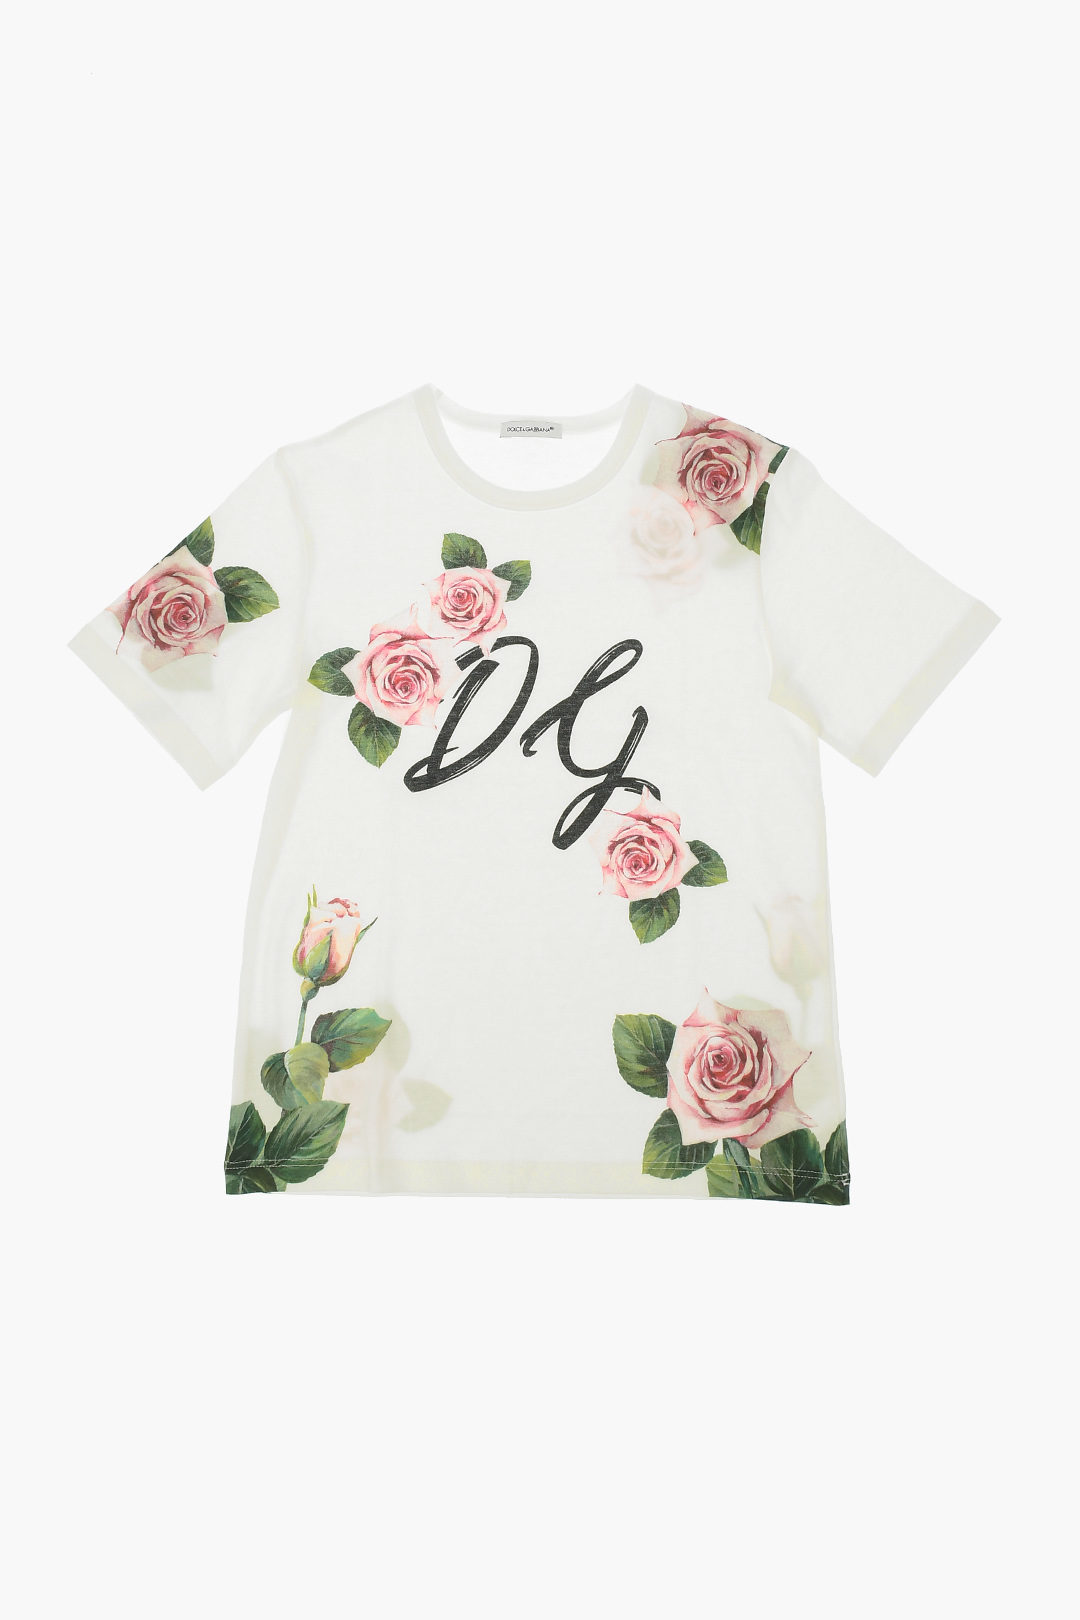 Dolce & Gabbana Kids Floral T-shirt girls - Glamood Outlet